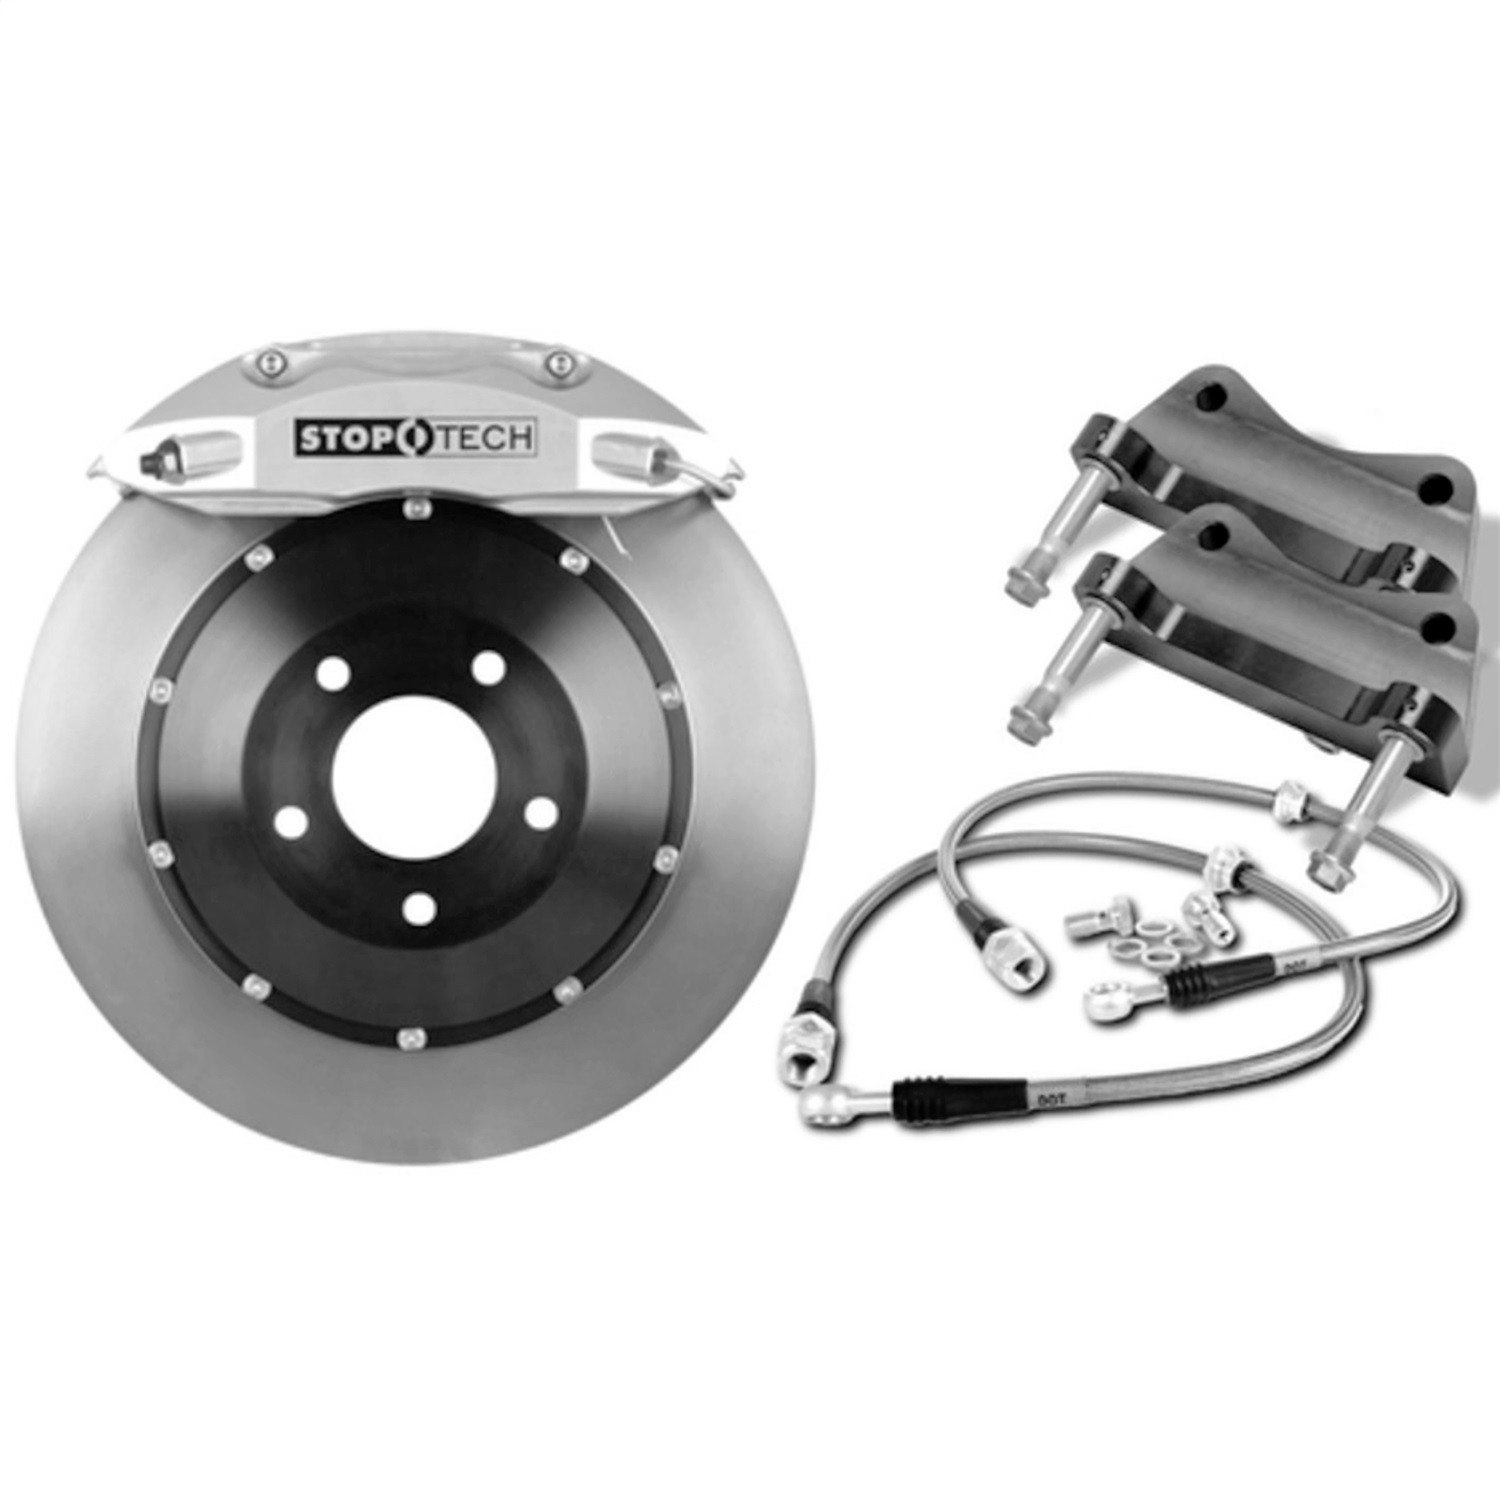 StopTech 83.895.4700.71 Big Brake Kit w/2 Piece Rotor